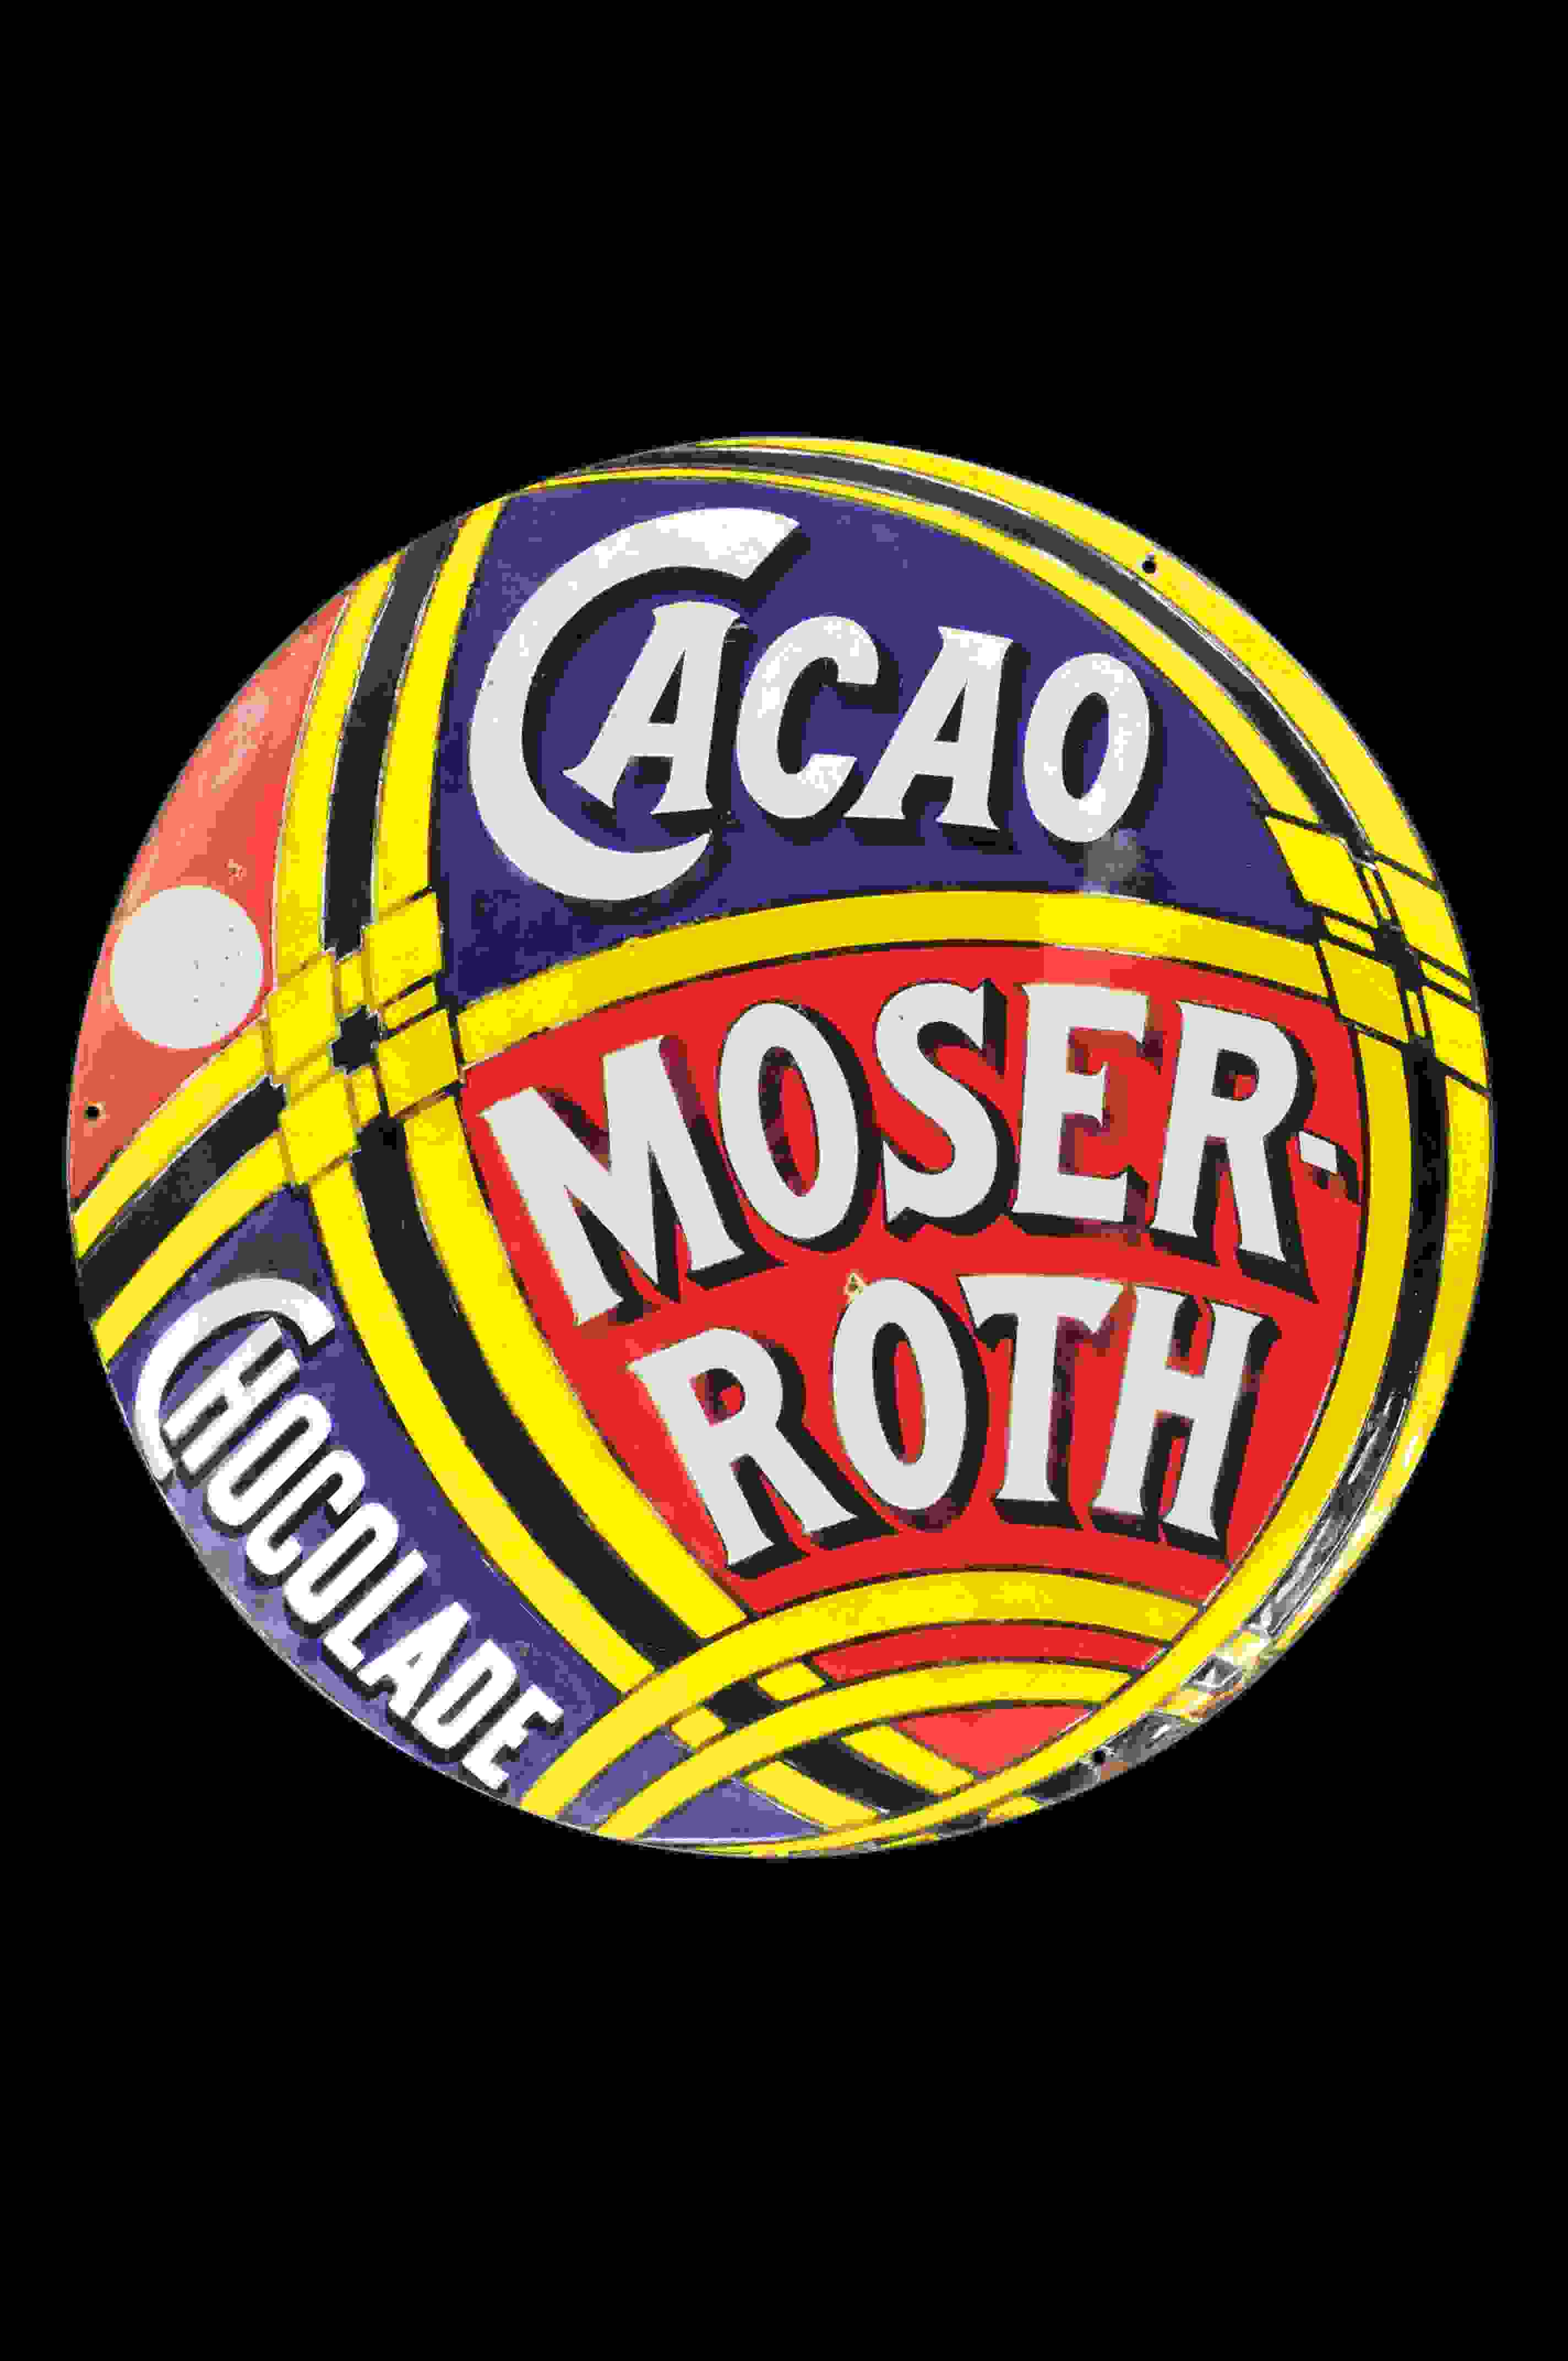 Moser-Roth Cacao 